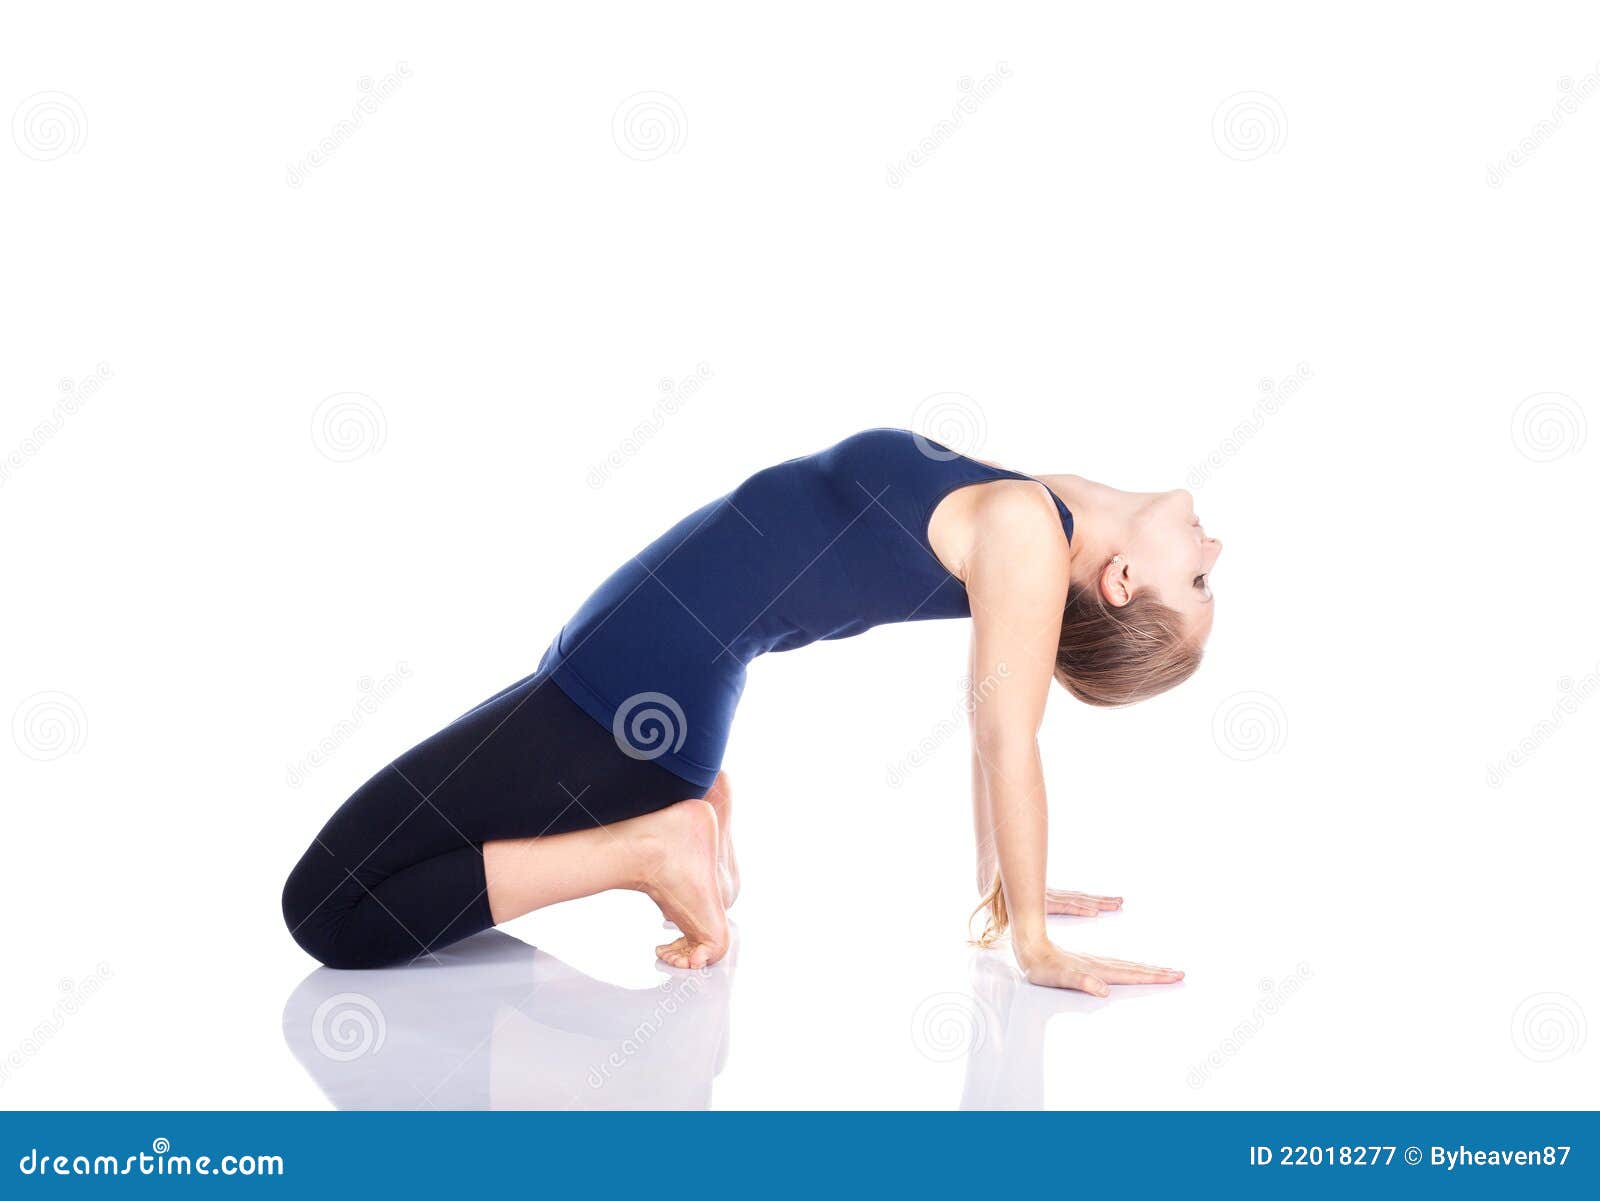 yoga backward bending pose